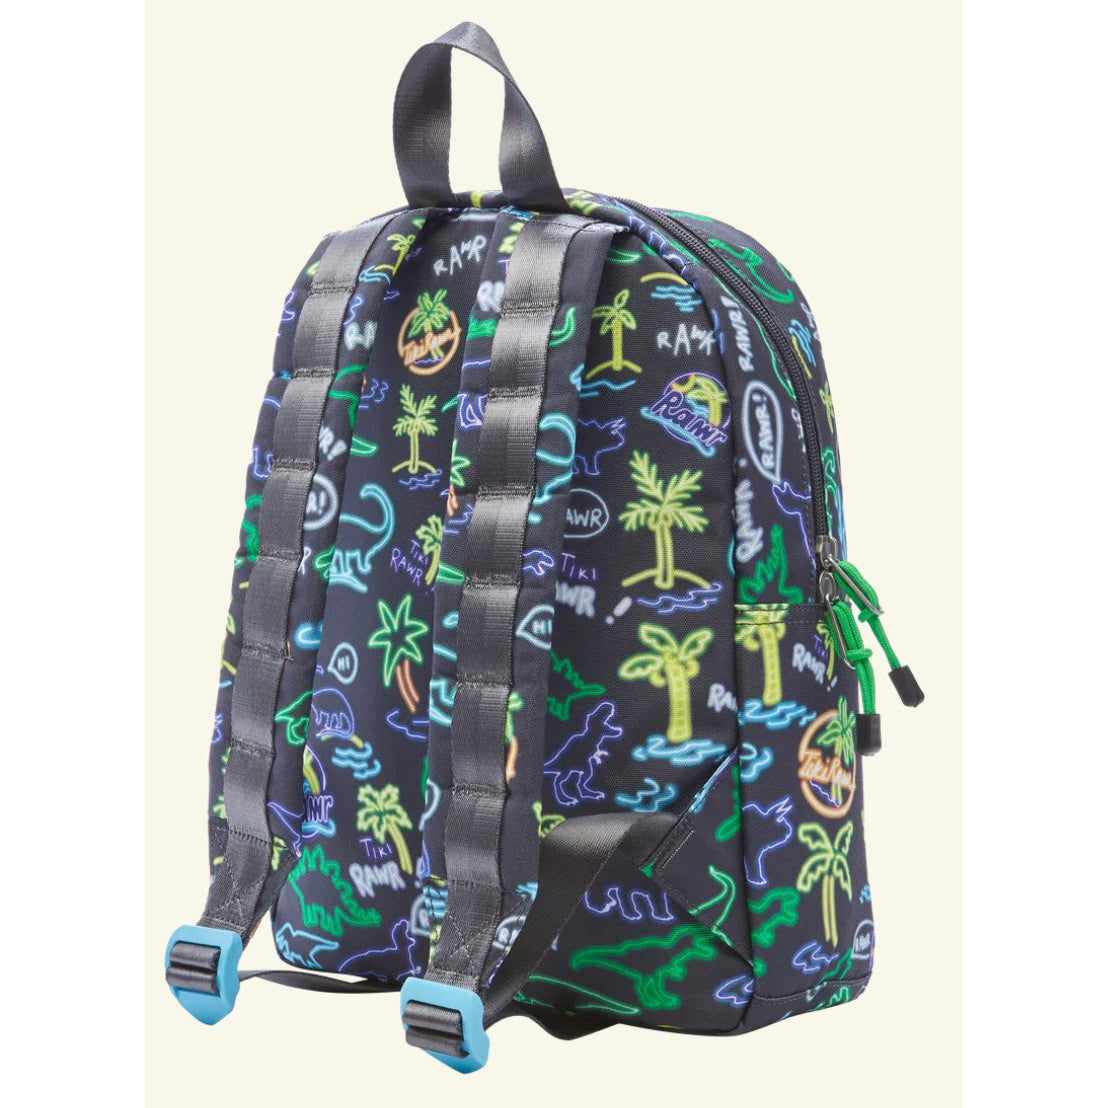 Kane Kids Backpack- Navy Dino